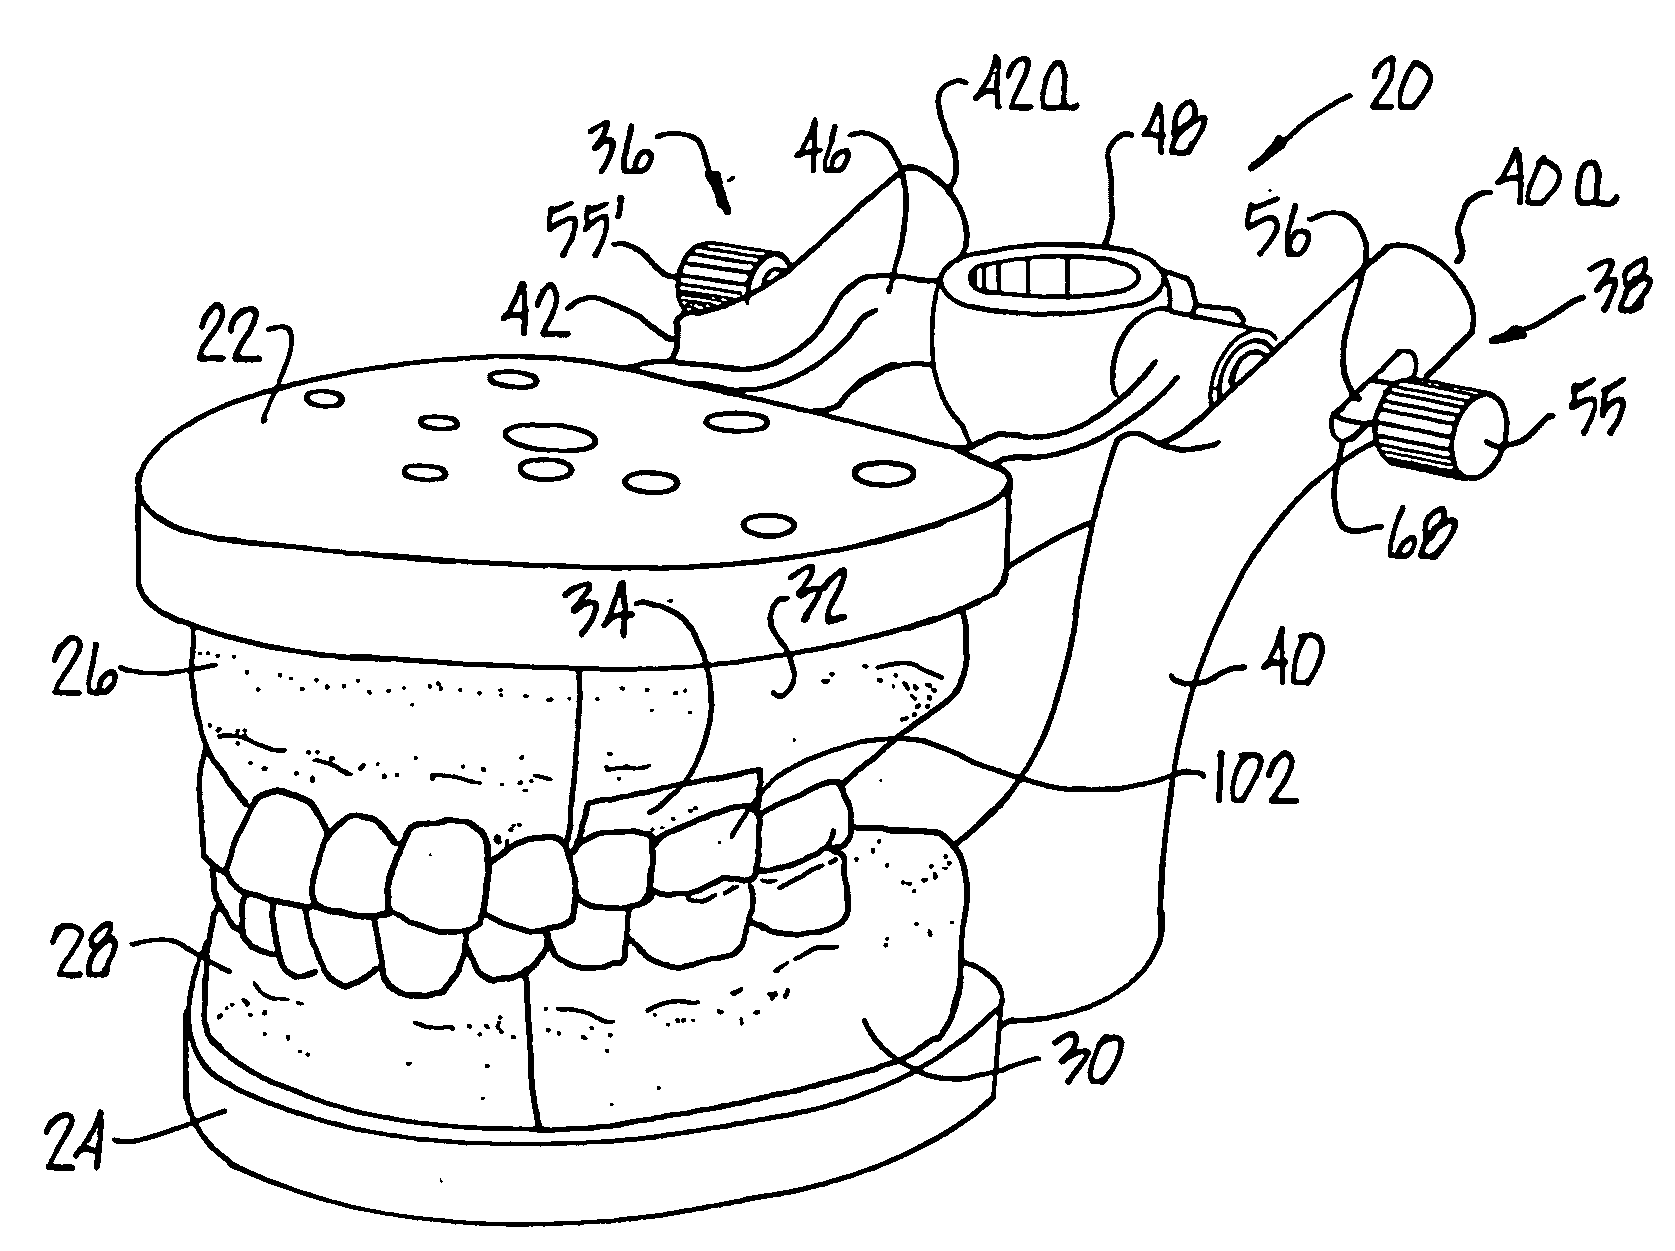 Dental articulator with endodontic module